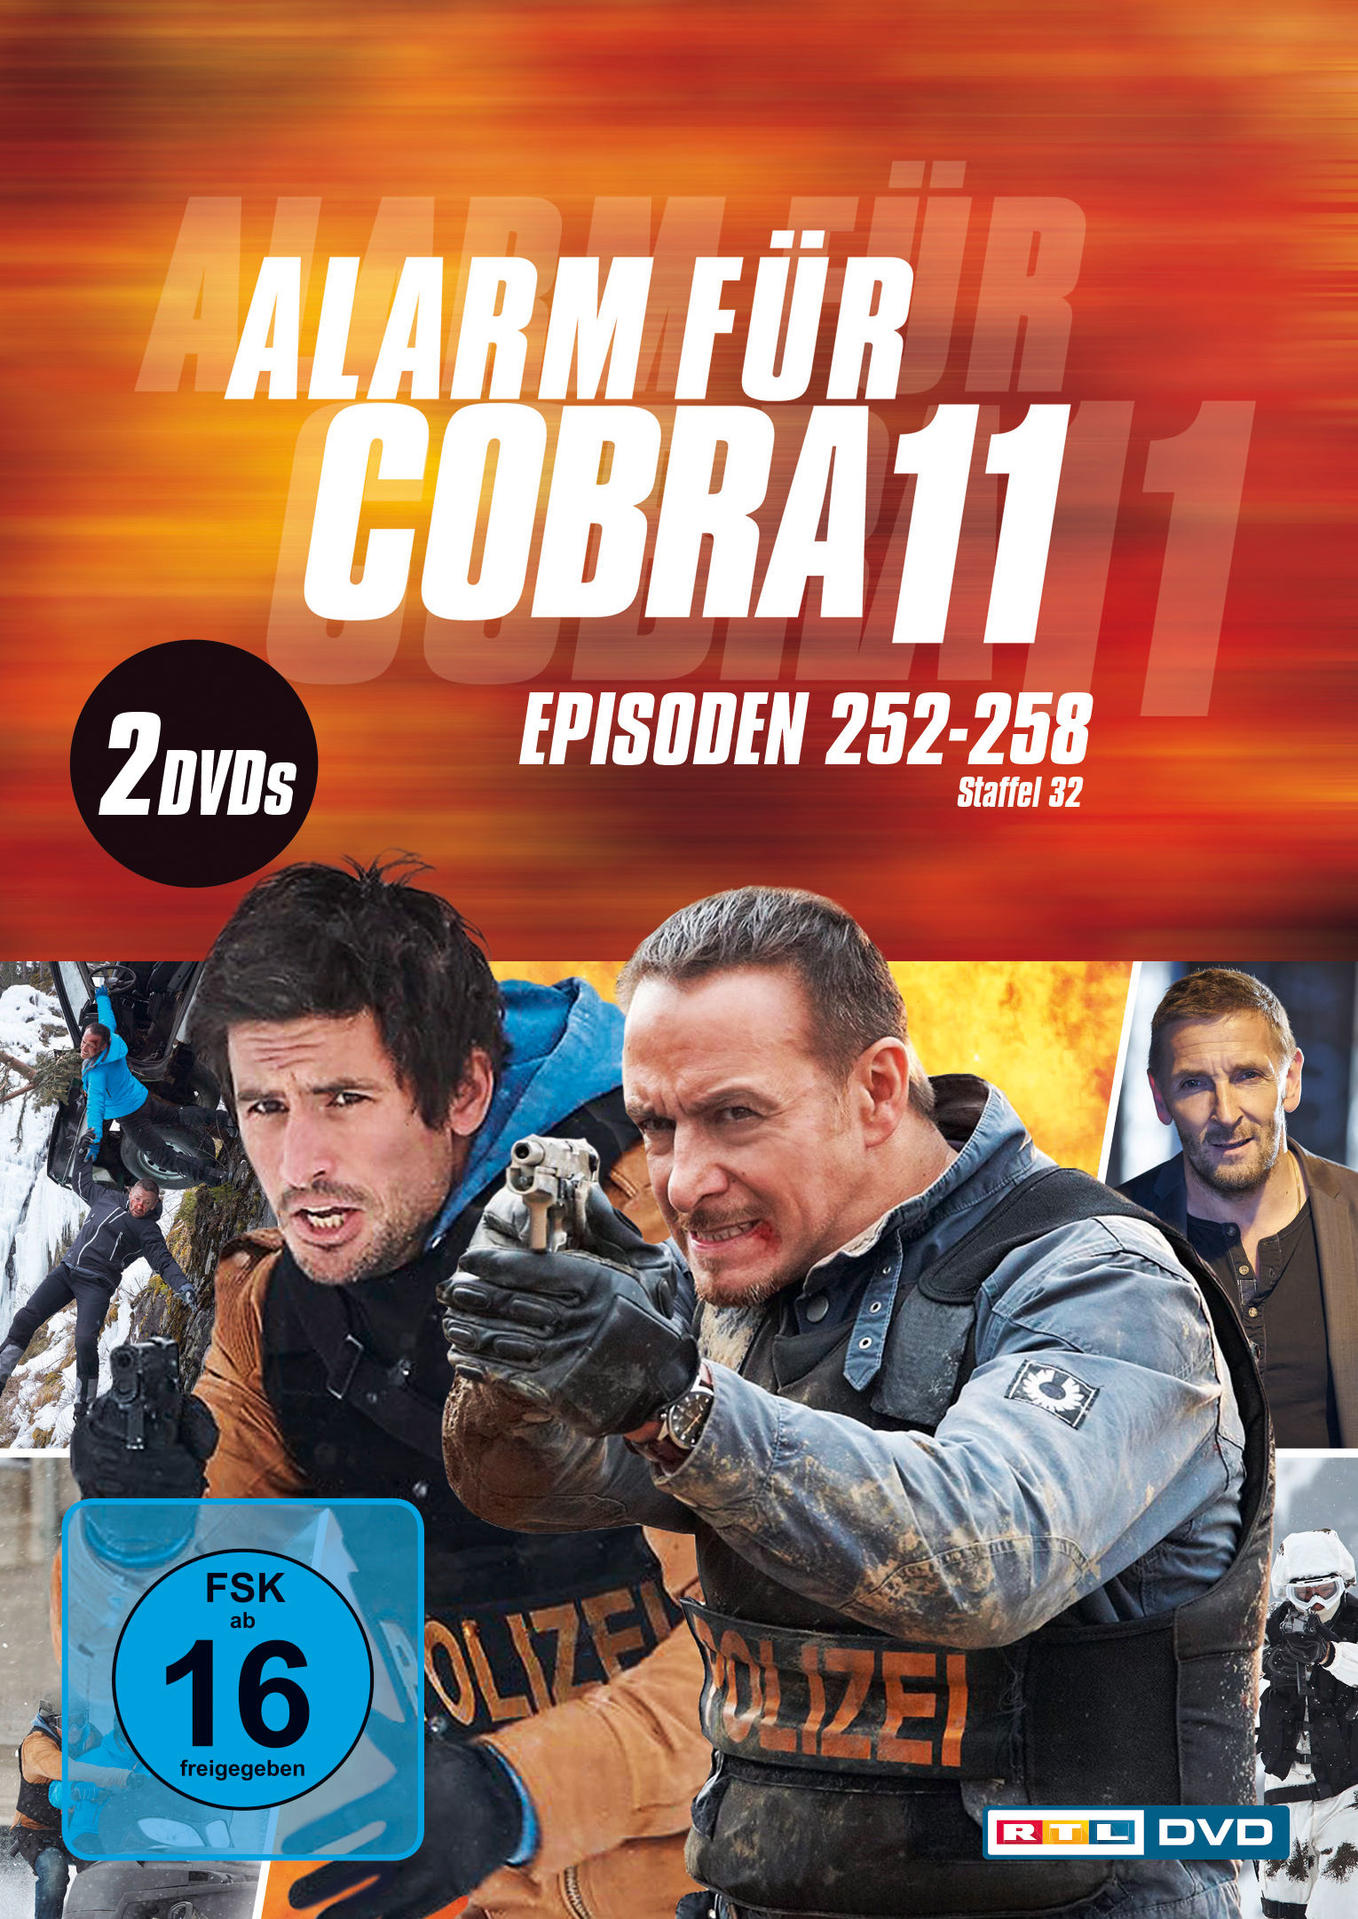 Alarm für Cobra 11 32 DVD - Staffel